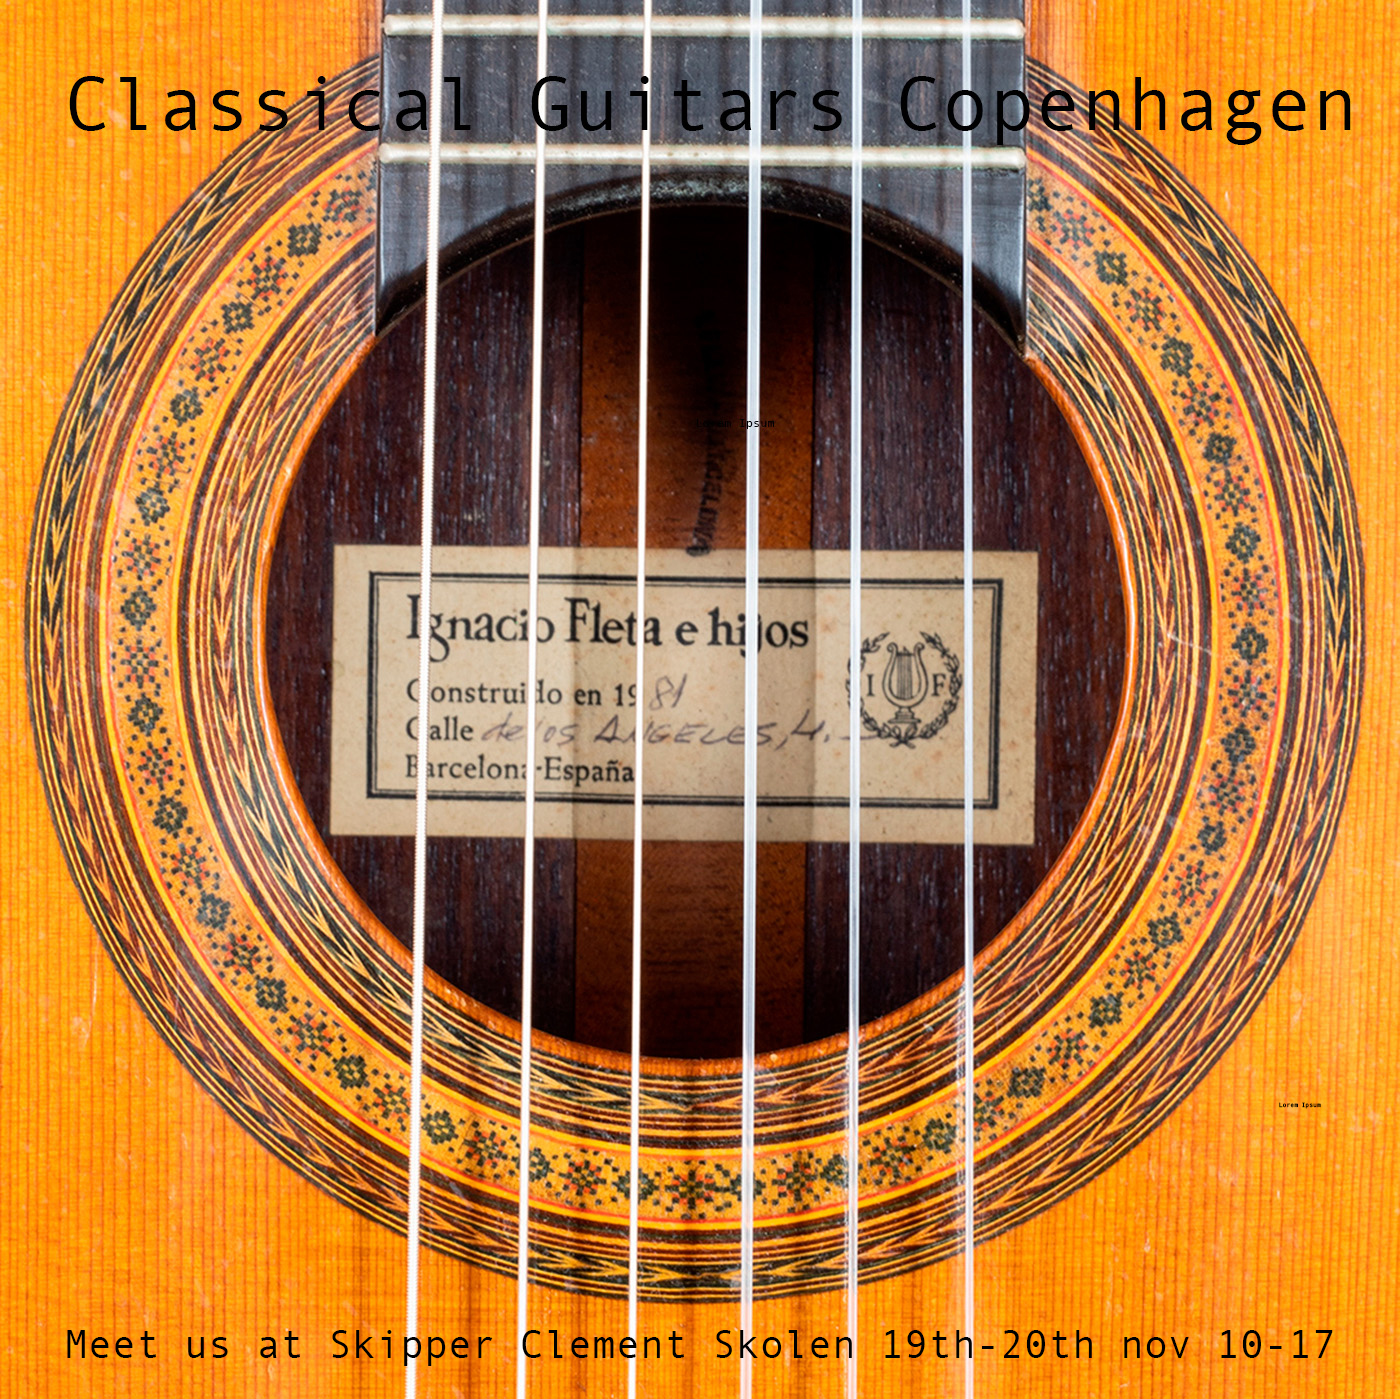 Classical Guitars Copenhagen